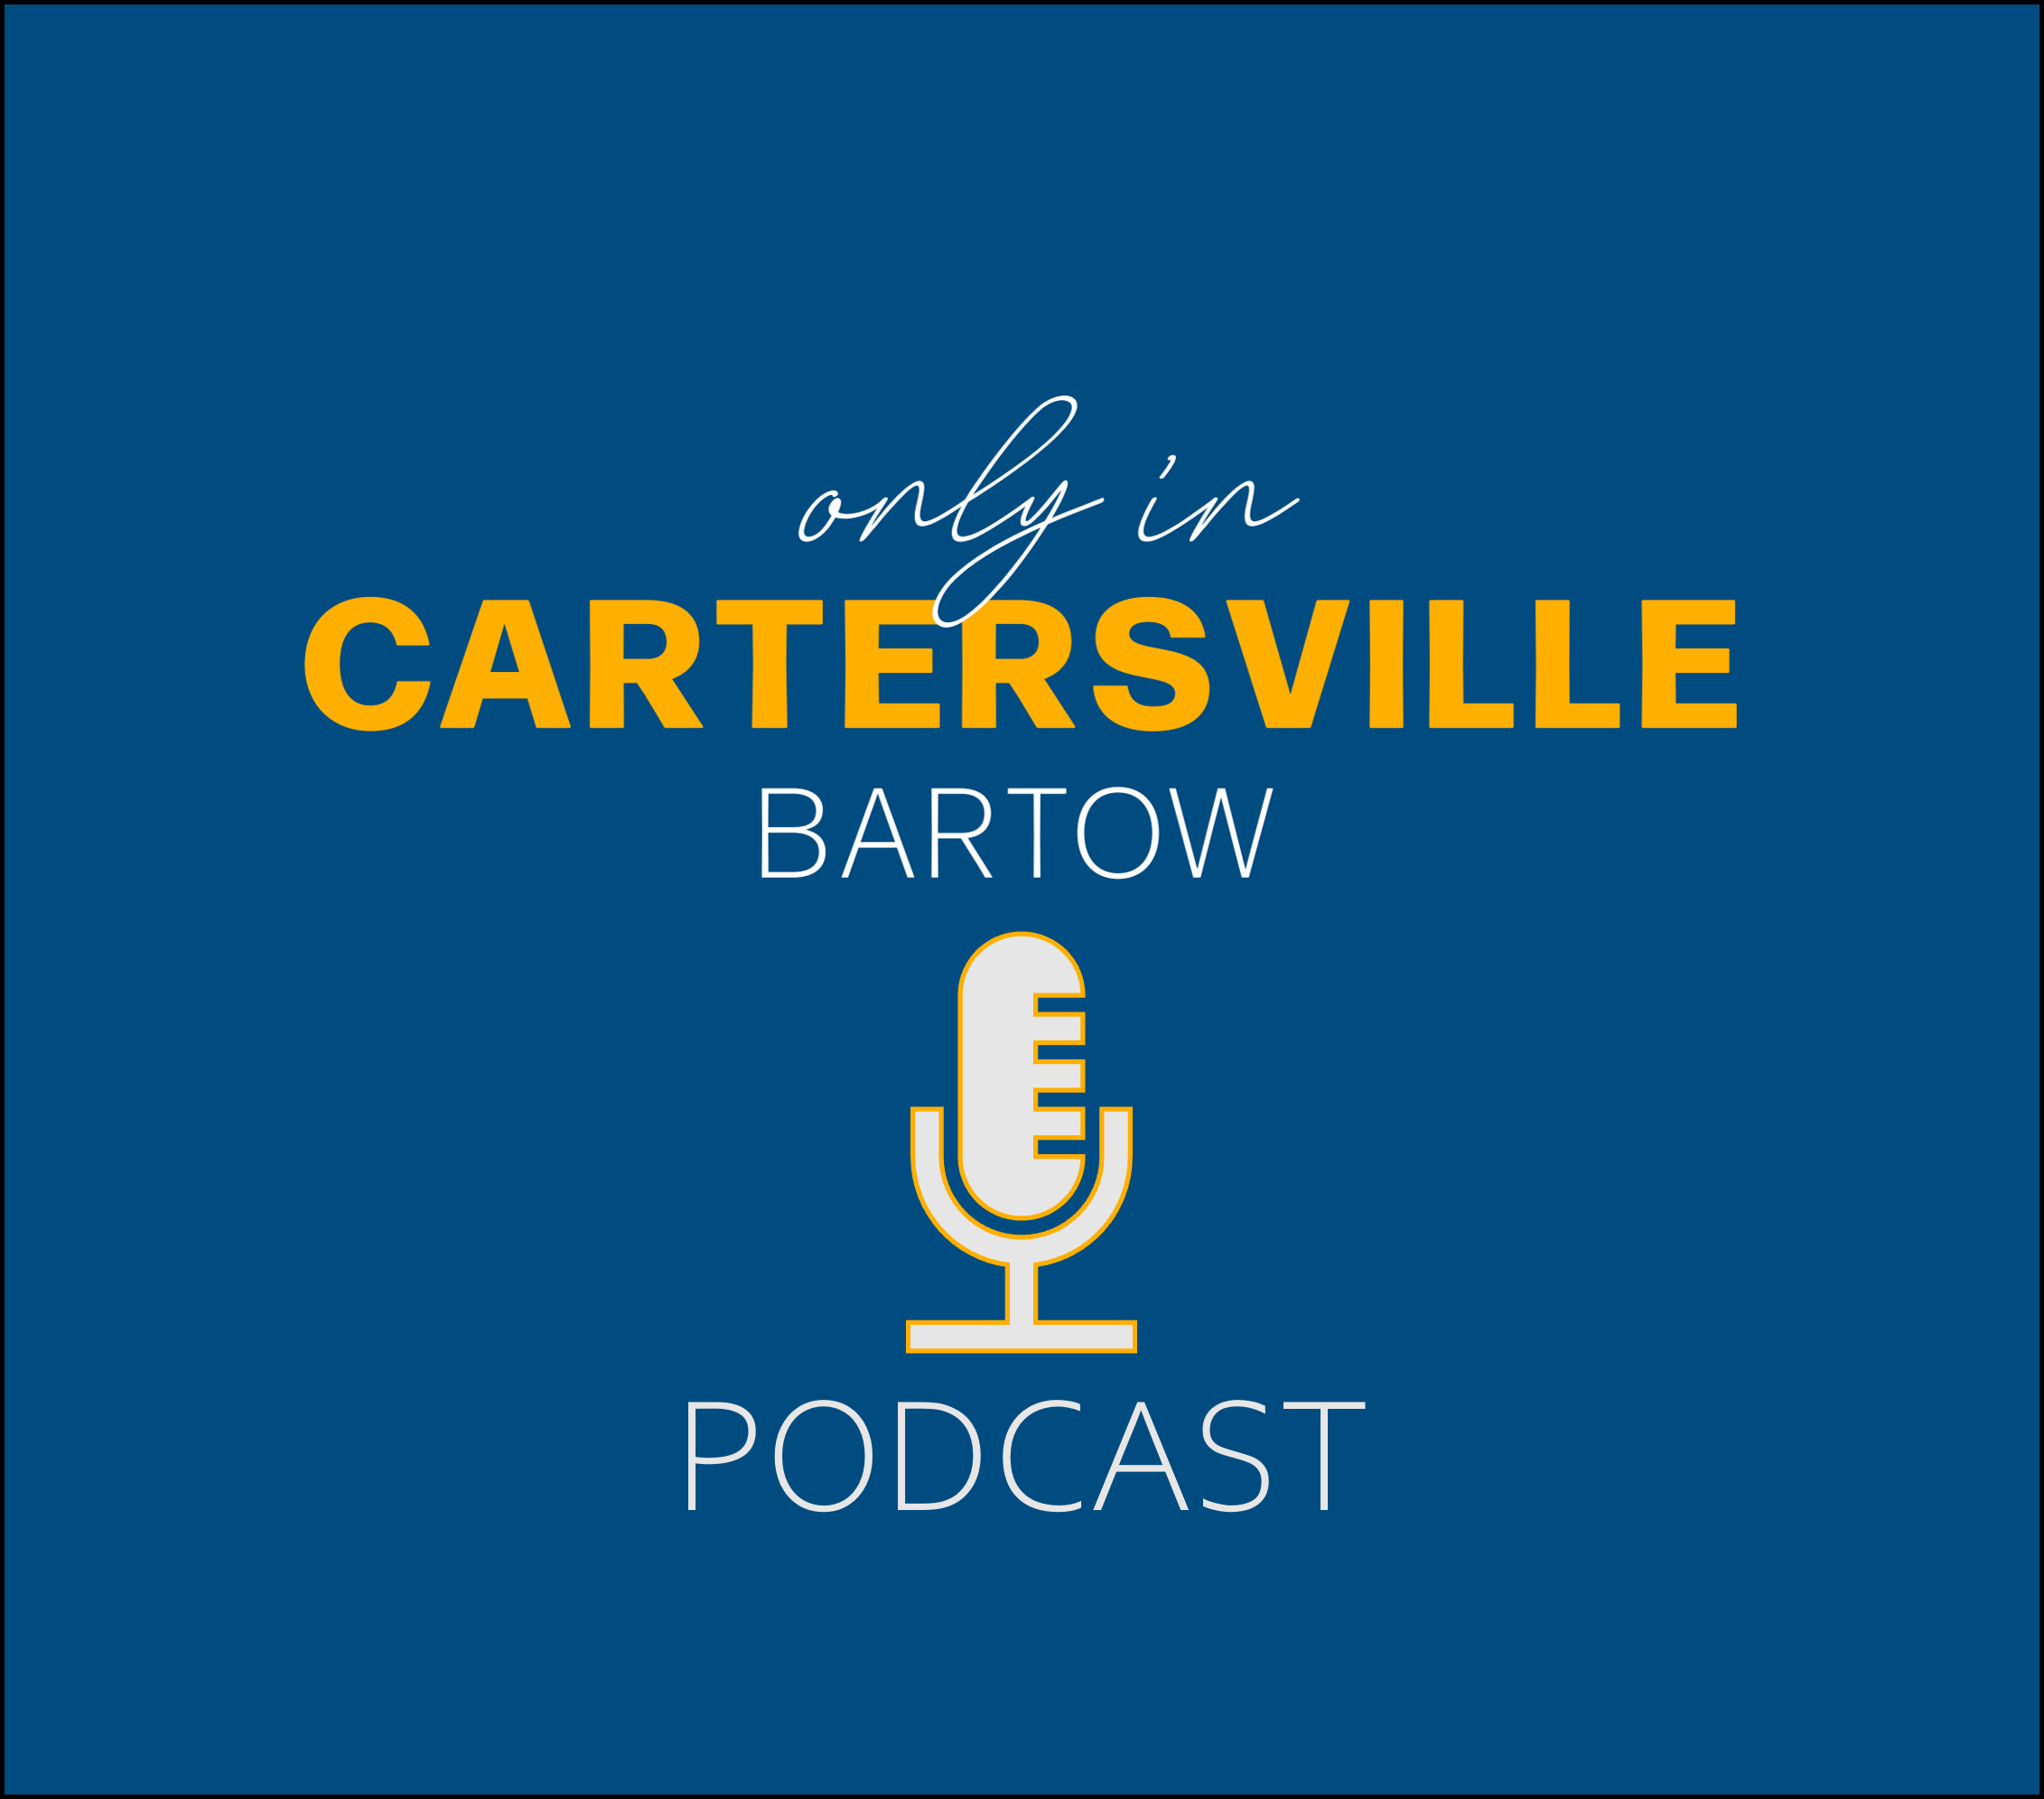 Cartersville Bartow - Farmer's Market